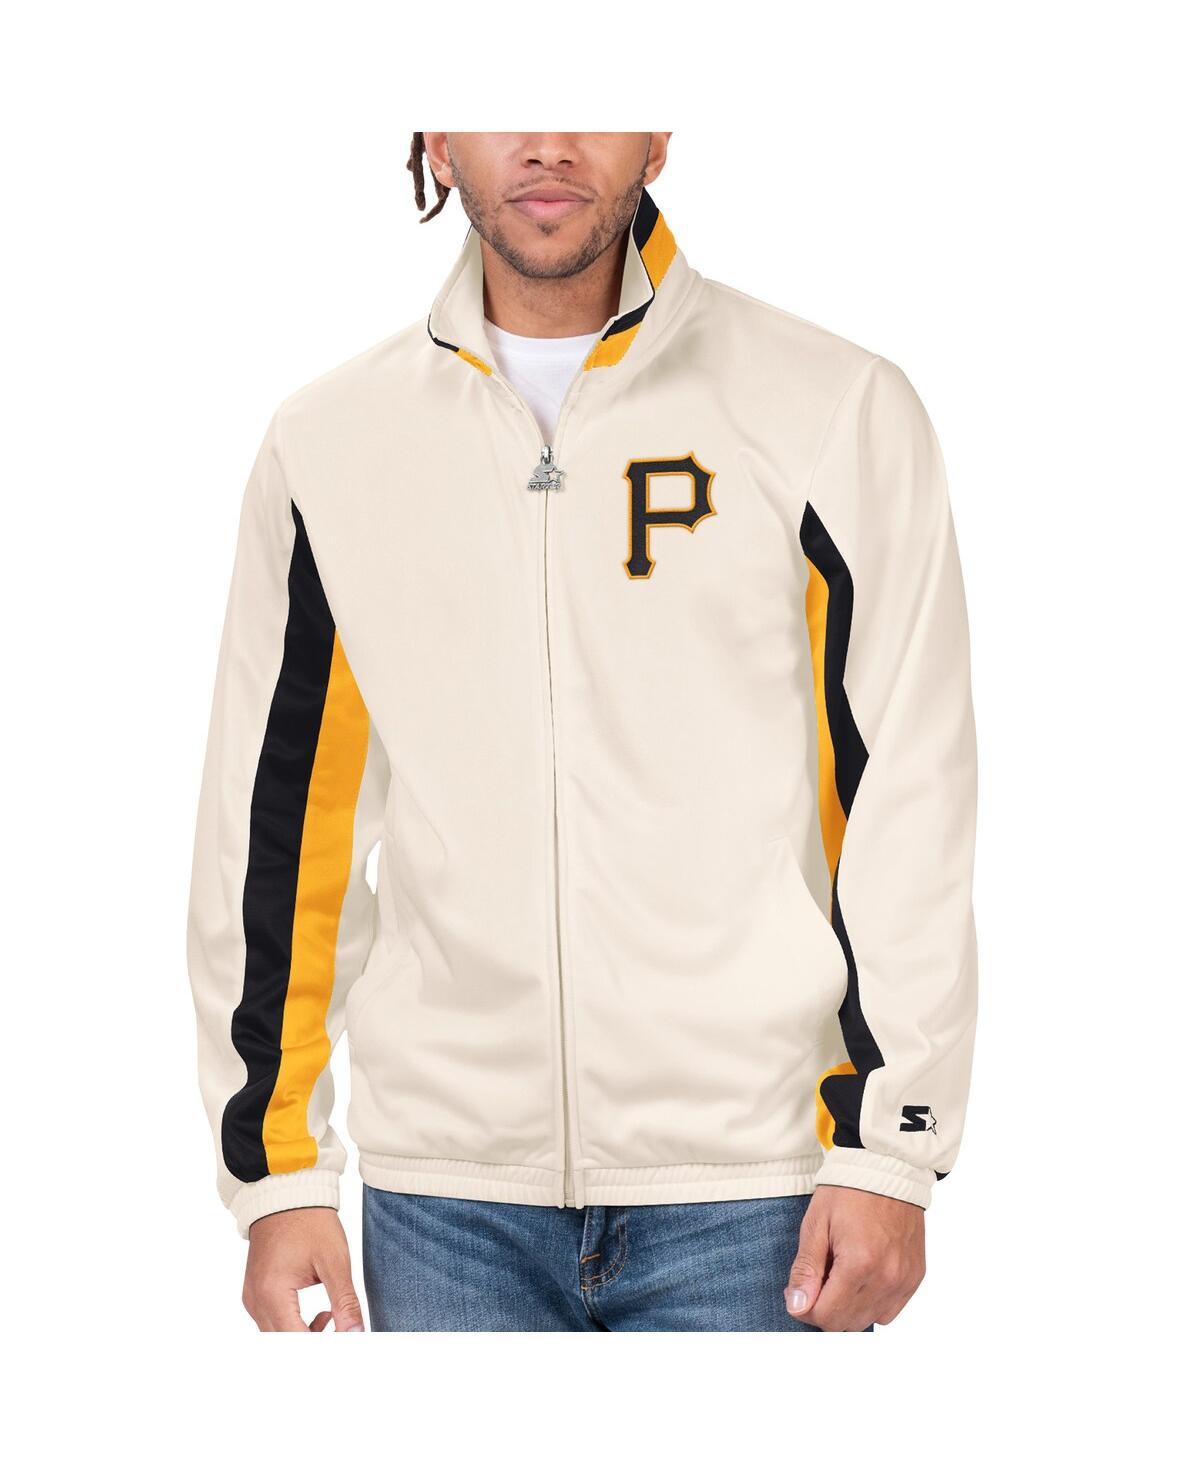 Shop Starter Men's  Cream Pittsburgh Pirates Rebound Cooperstown Collection Full-zip Track Jacket